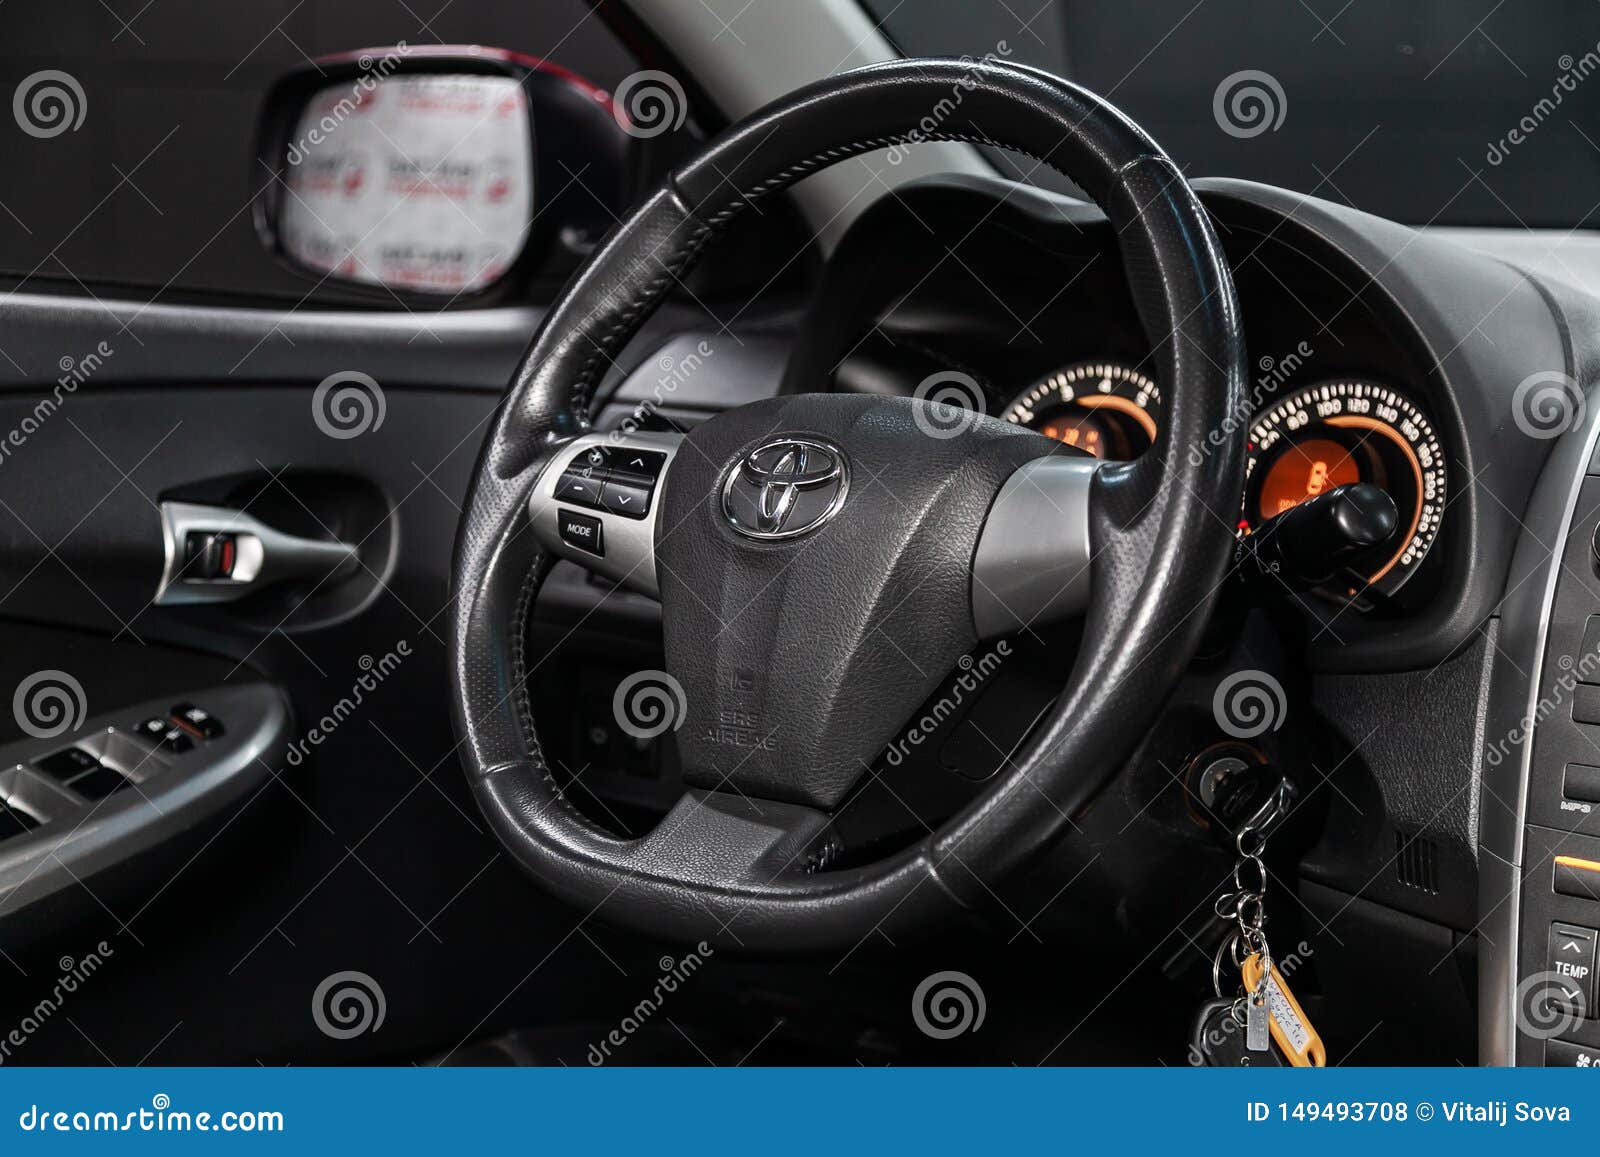 Novosibirsk Russia May 31 2019 Toyota Corolla Editorial